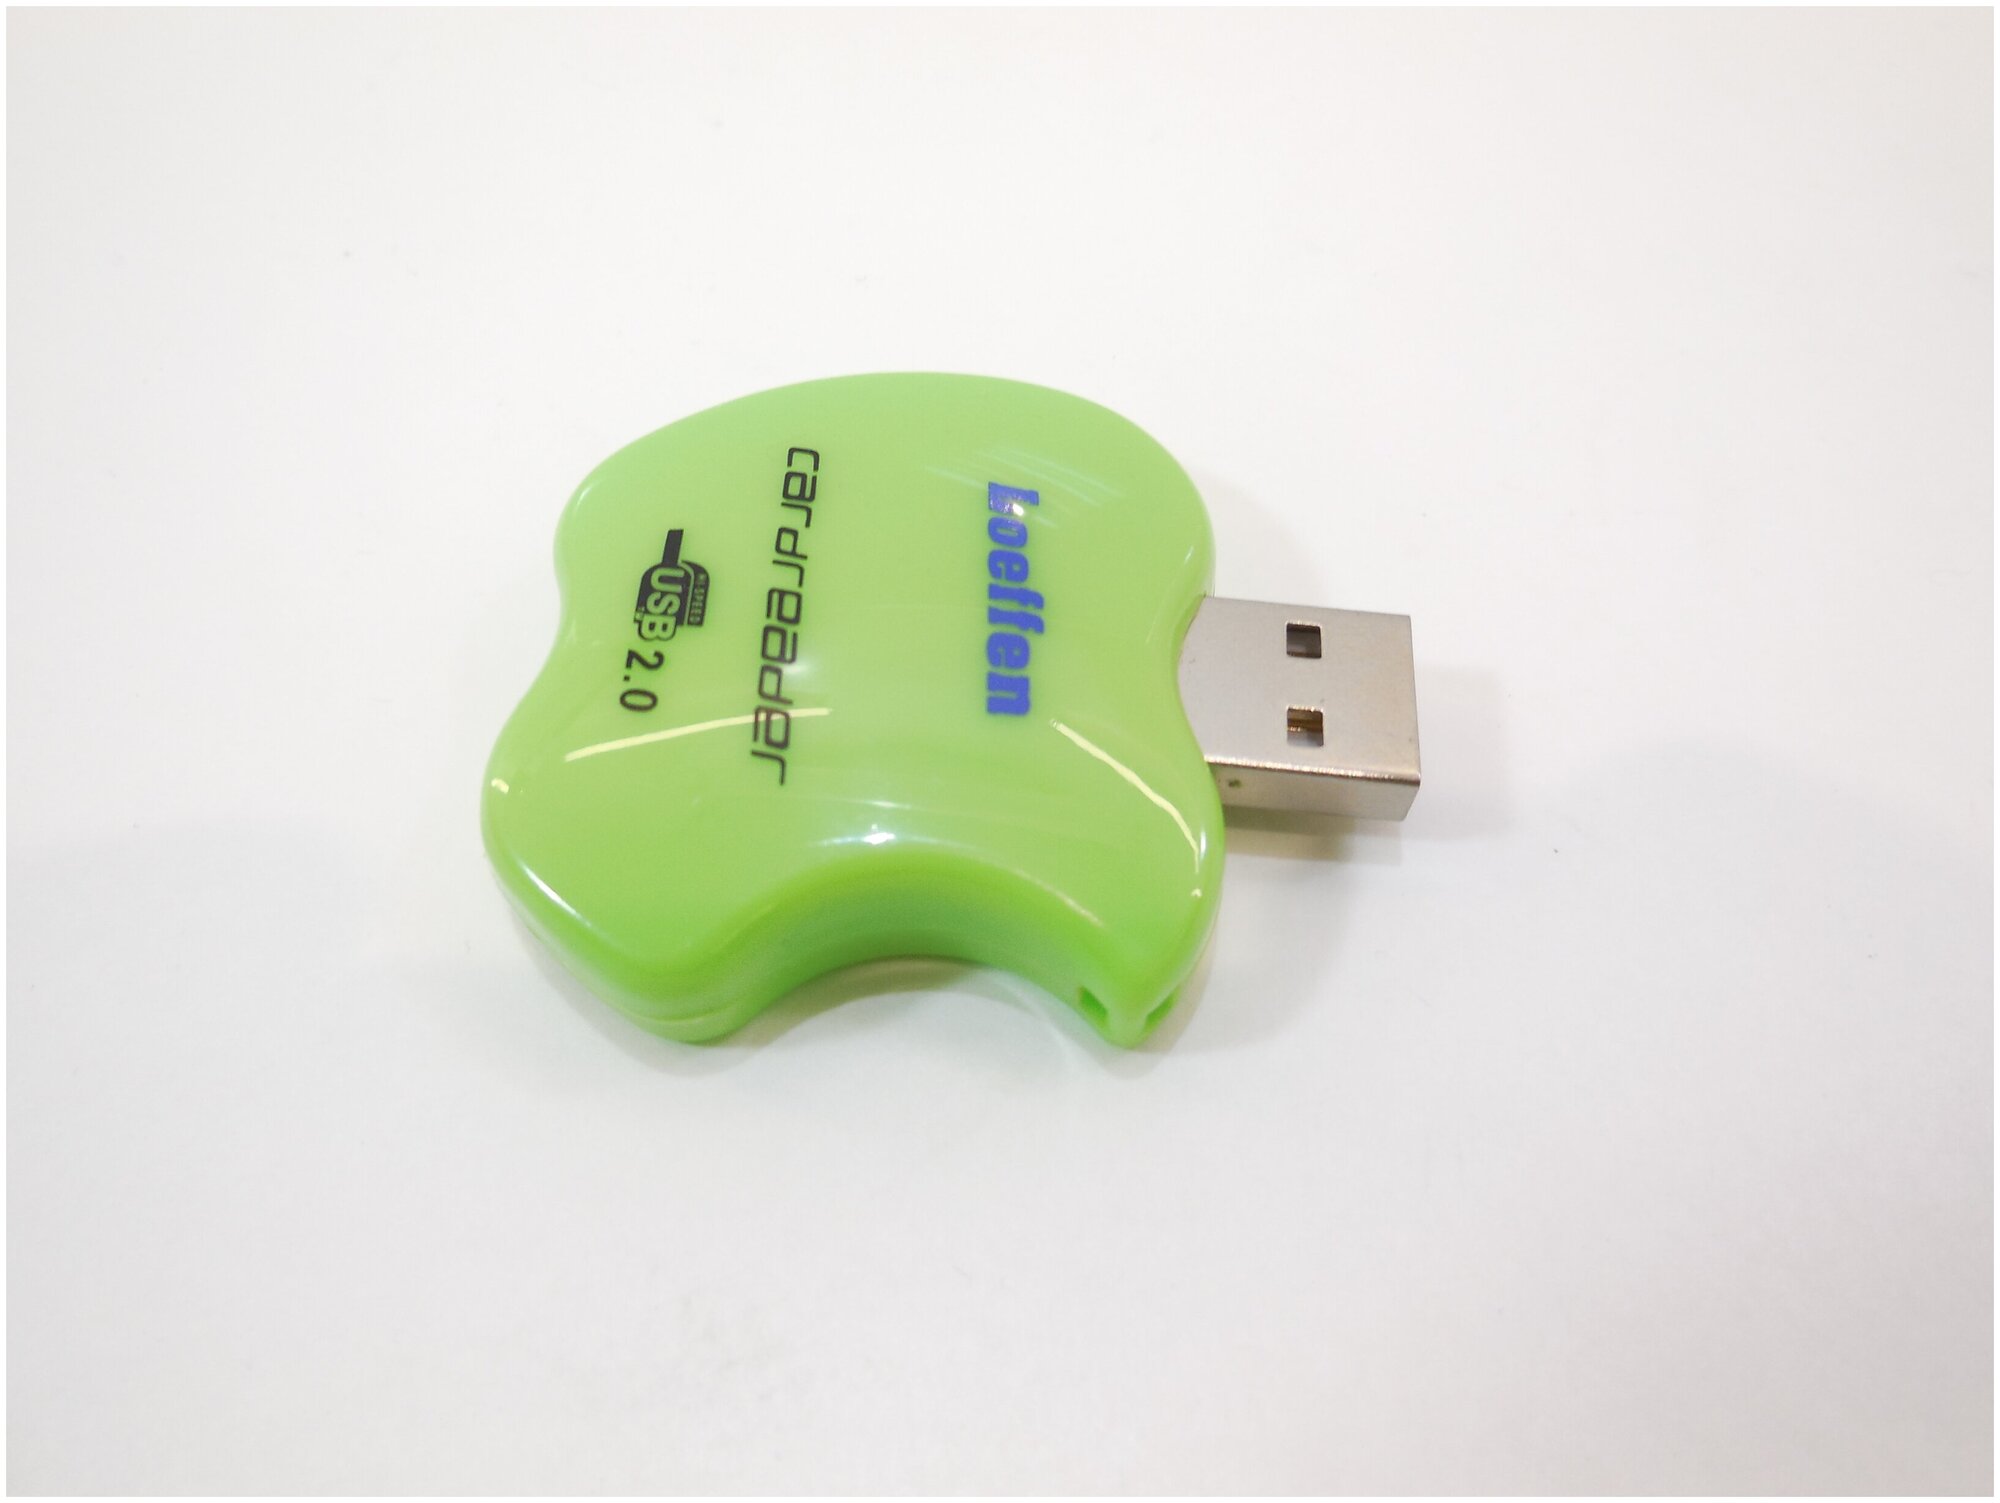 USB Картридер SD to USB Loeffen Lf-CP-759 для SD / SDHC карт цвет зеленый форма Apple